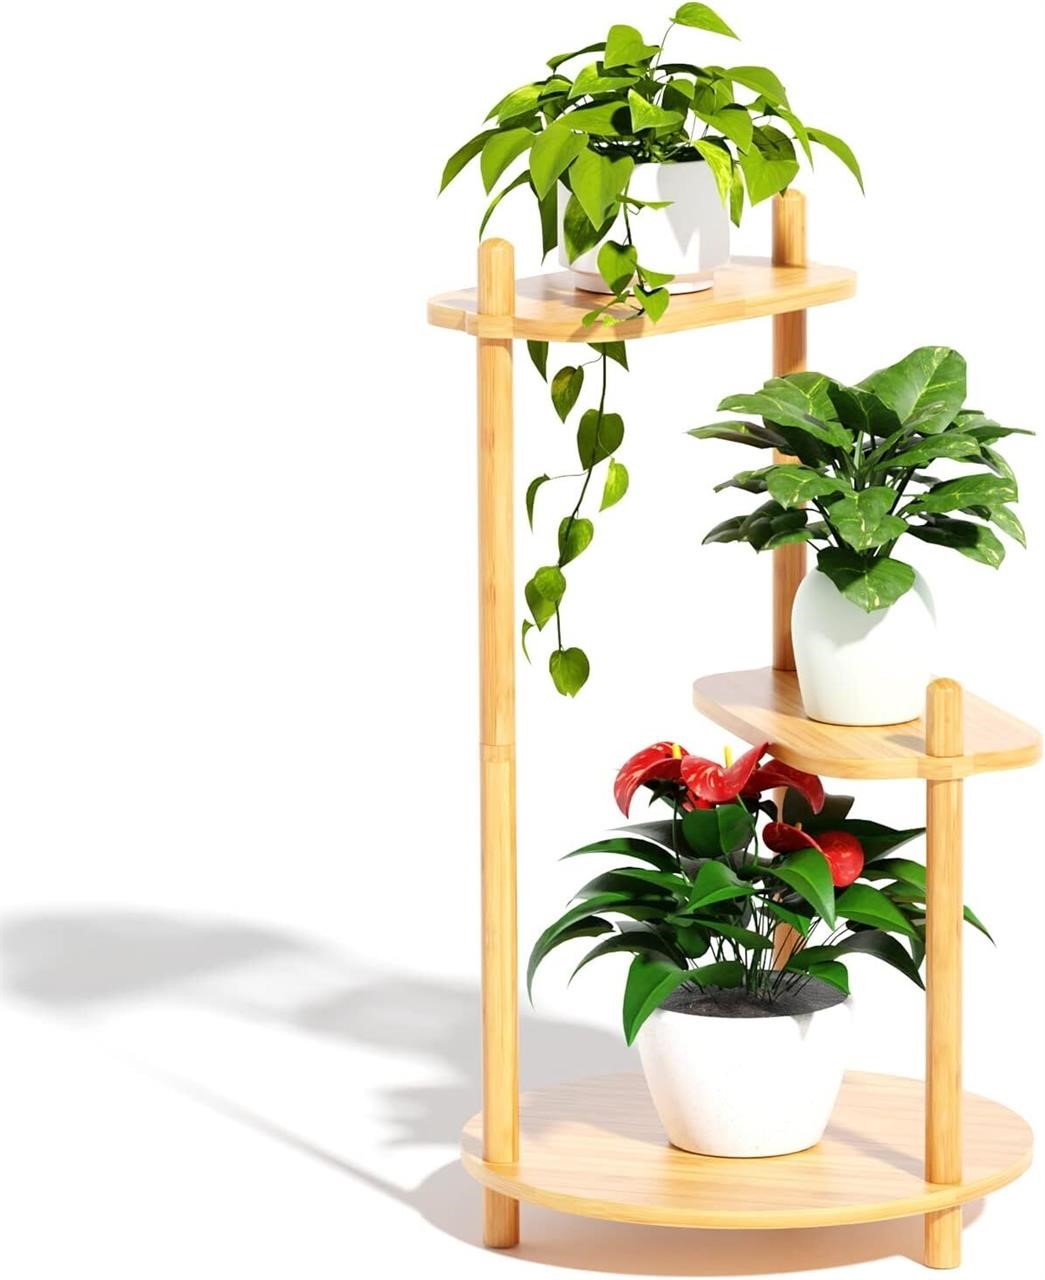 Enisudo 3 Tier Plant Stand Indoor/Outdoor Use